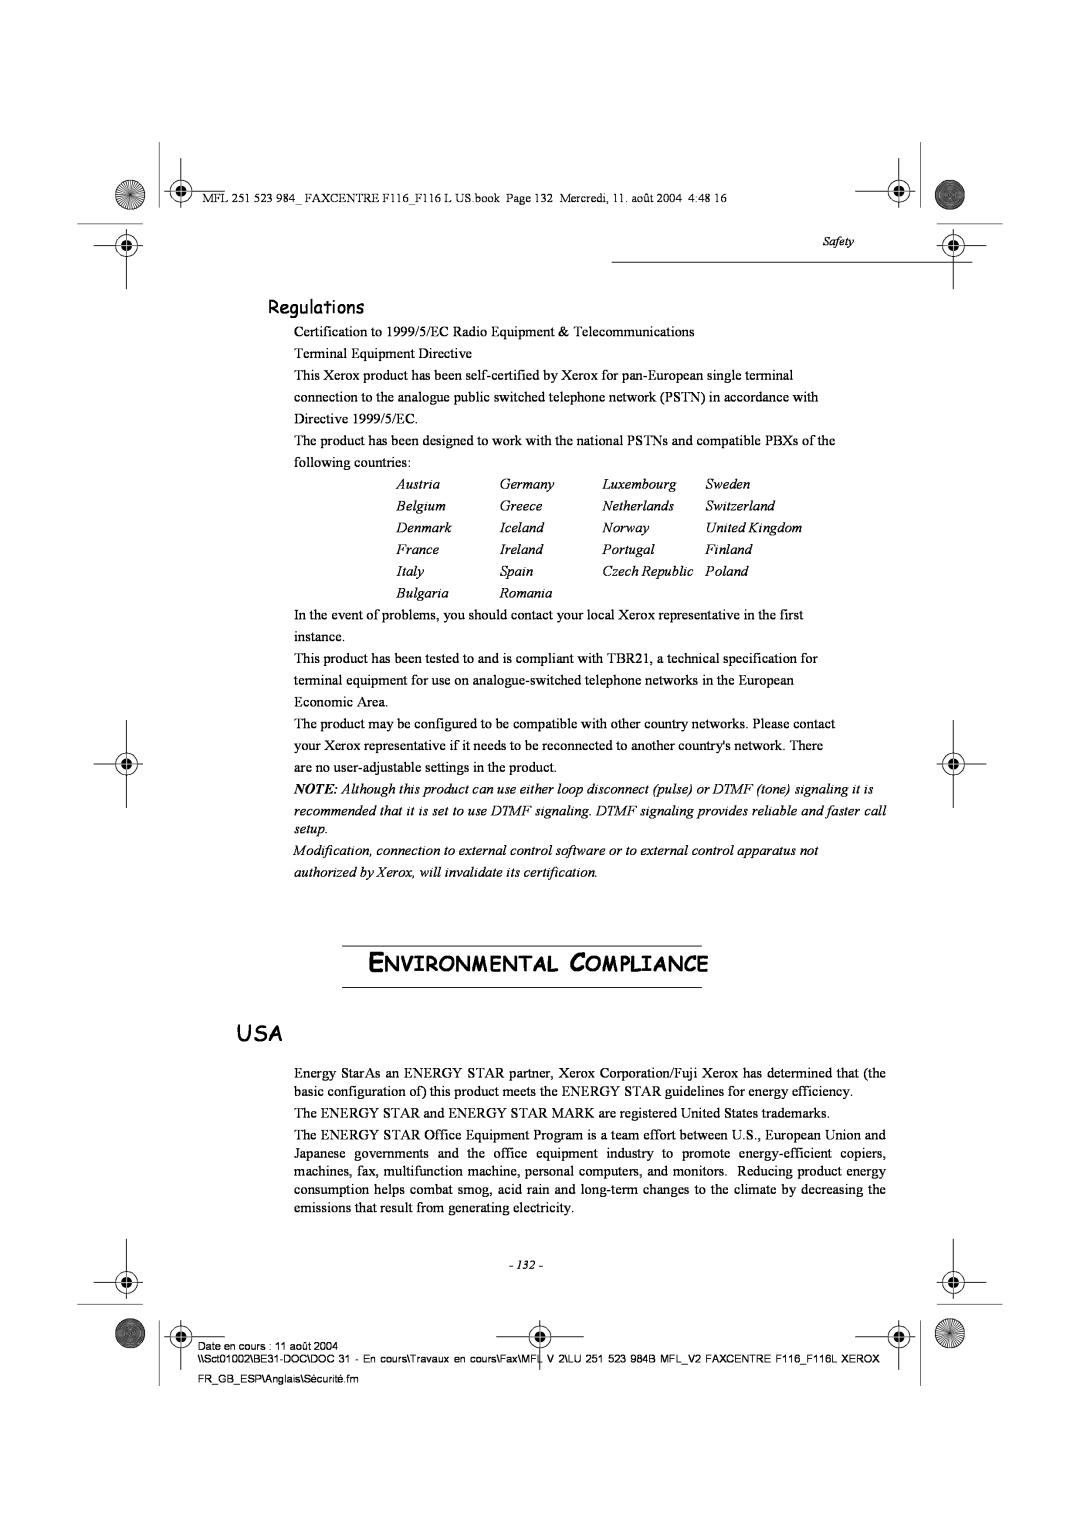 Xerox F116 user manual Environmental Compliance, Regulations 